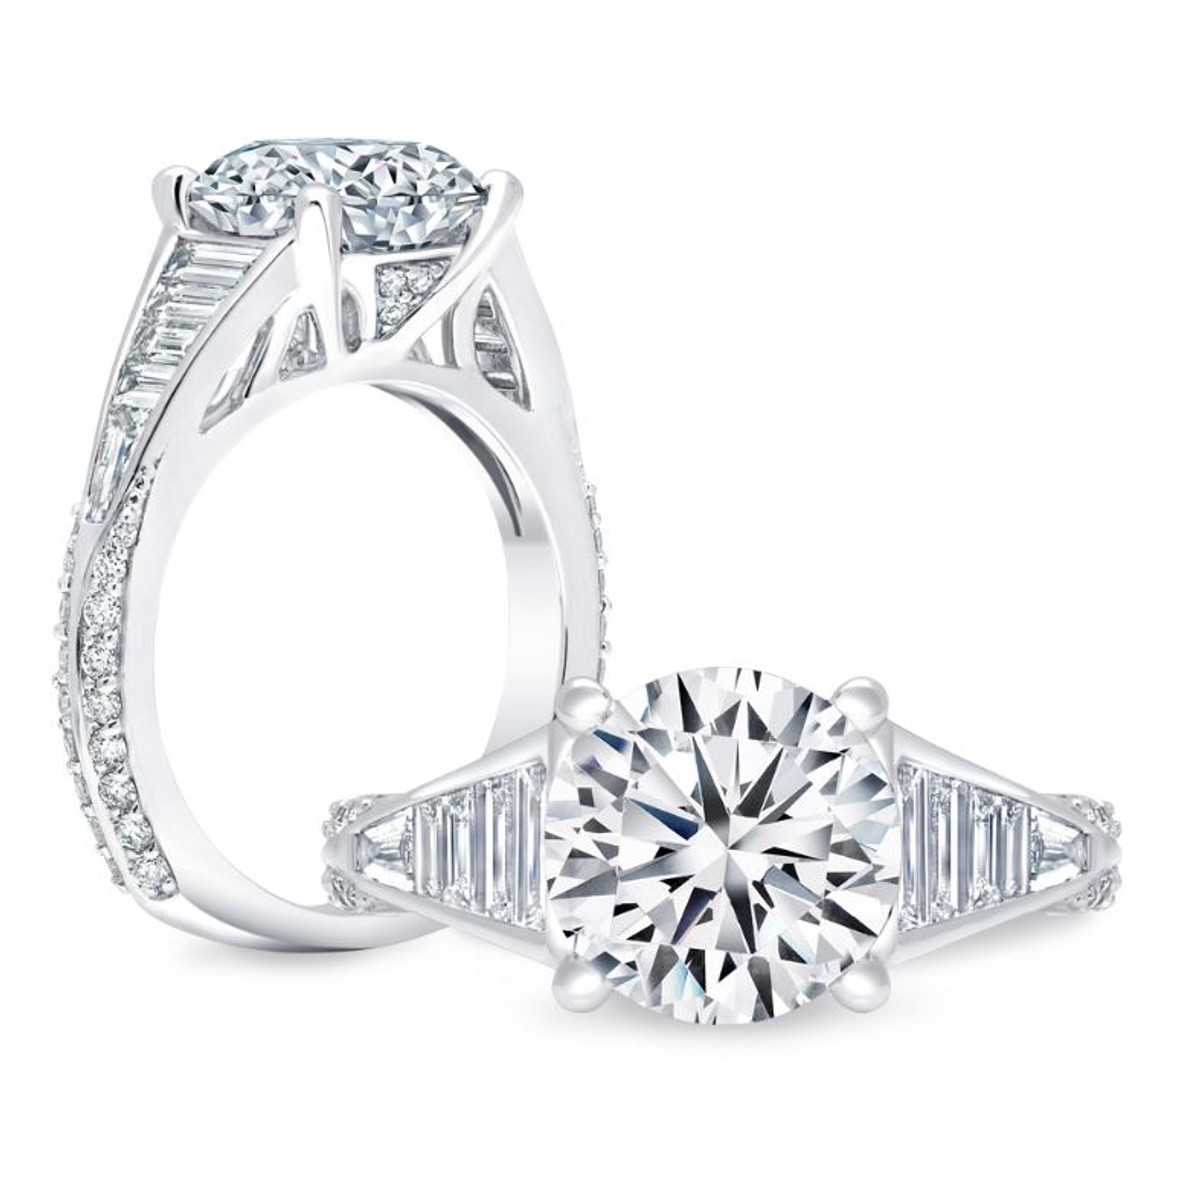 Peter Storm 14K White Gold Diamond Semi-Mount Engagement Ring-39095 Product Image